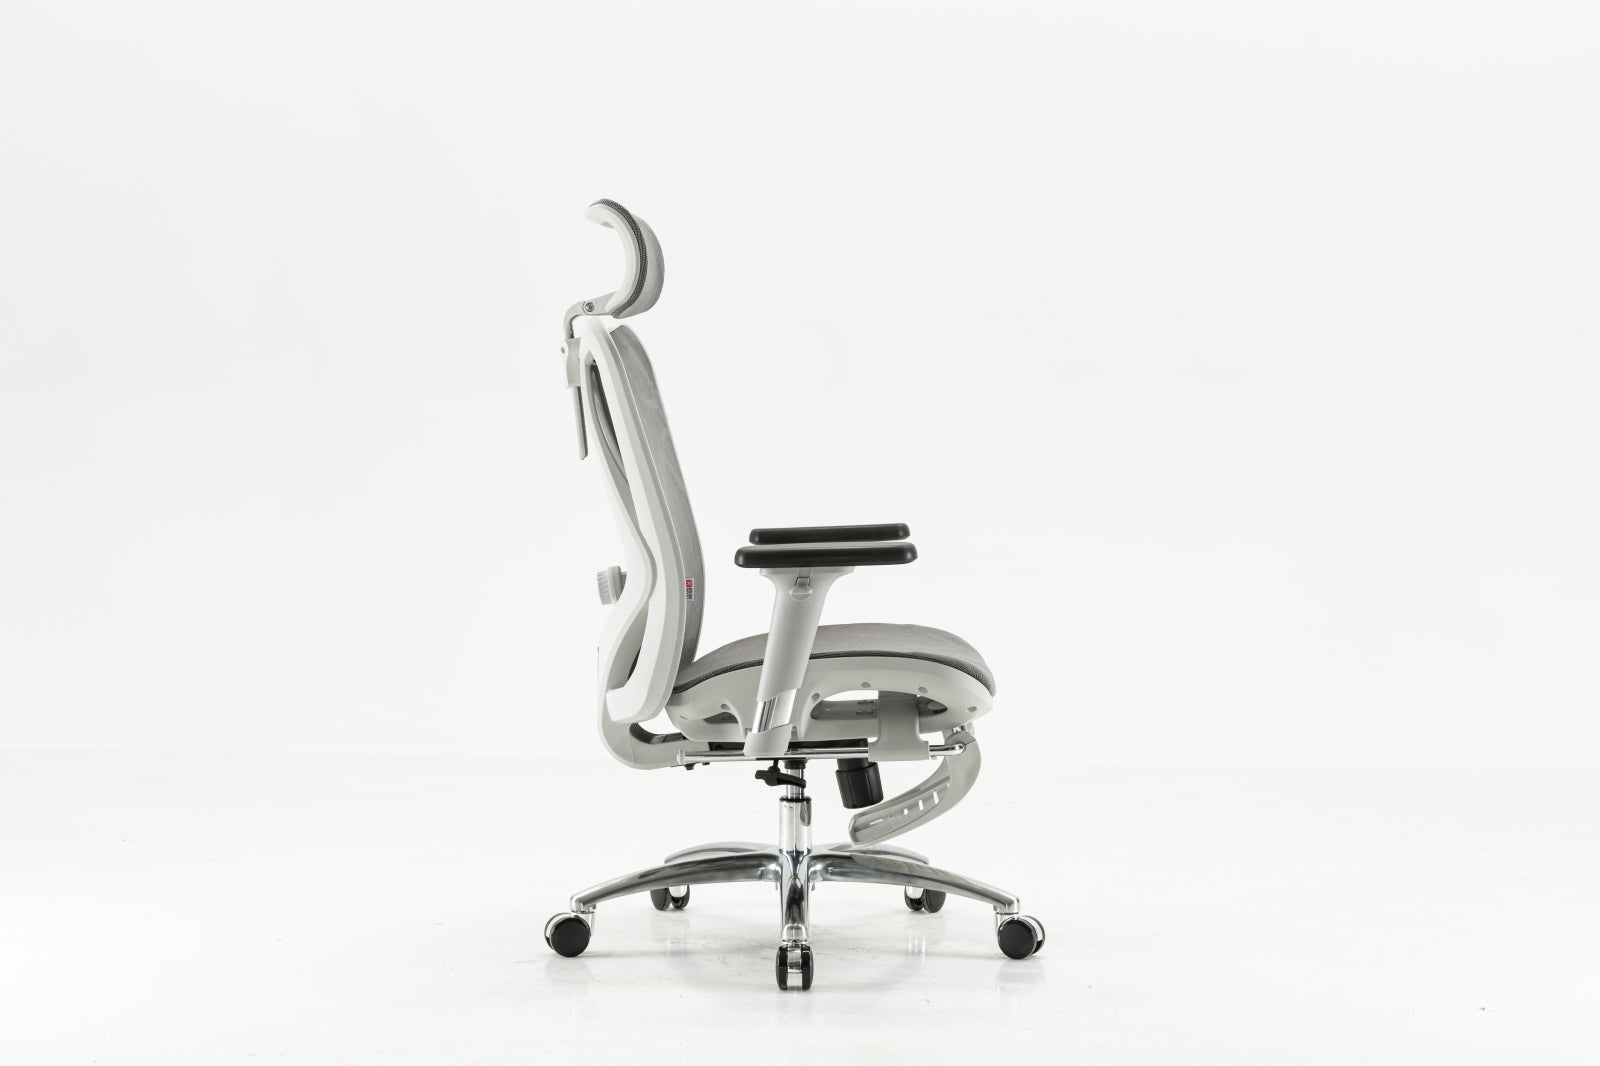 Sihoo M57 Ergonomic Chair WFR (with built-in footrest) – TWU PH x Sihoo